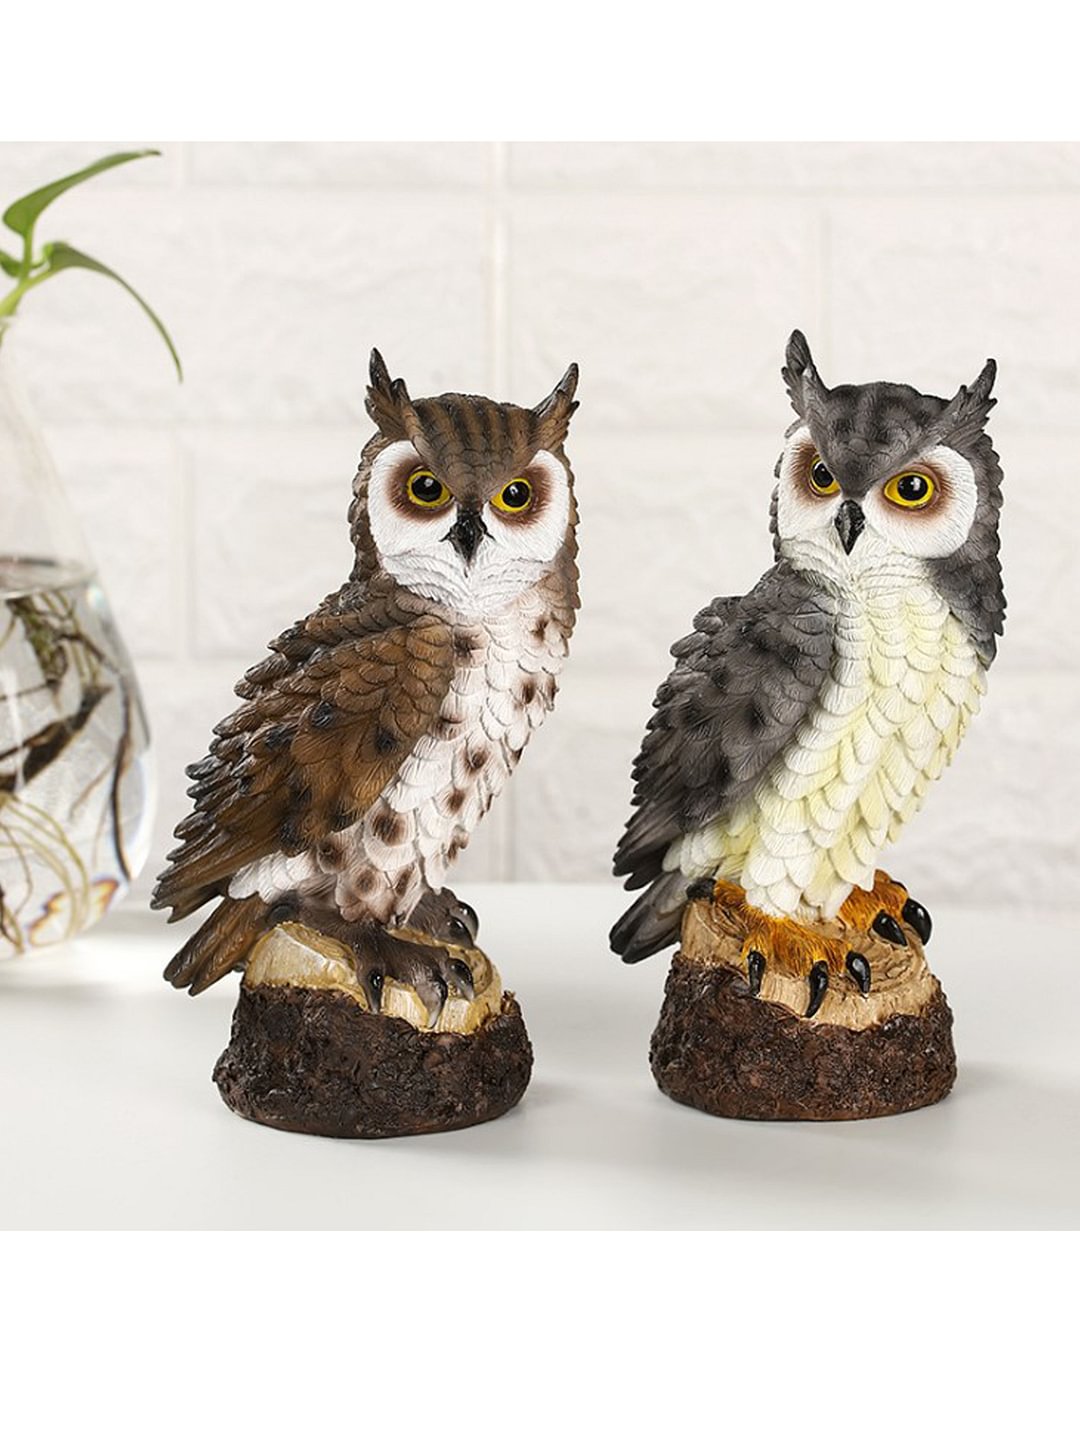 Garden Creative Ornaments Owls, Garden Resin Crafts, Bird Models, Wooden Decorations